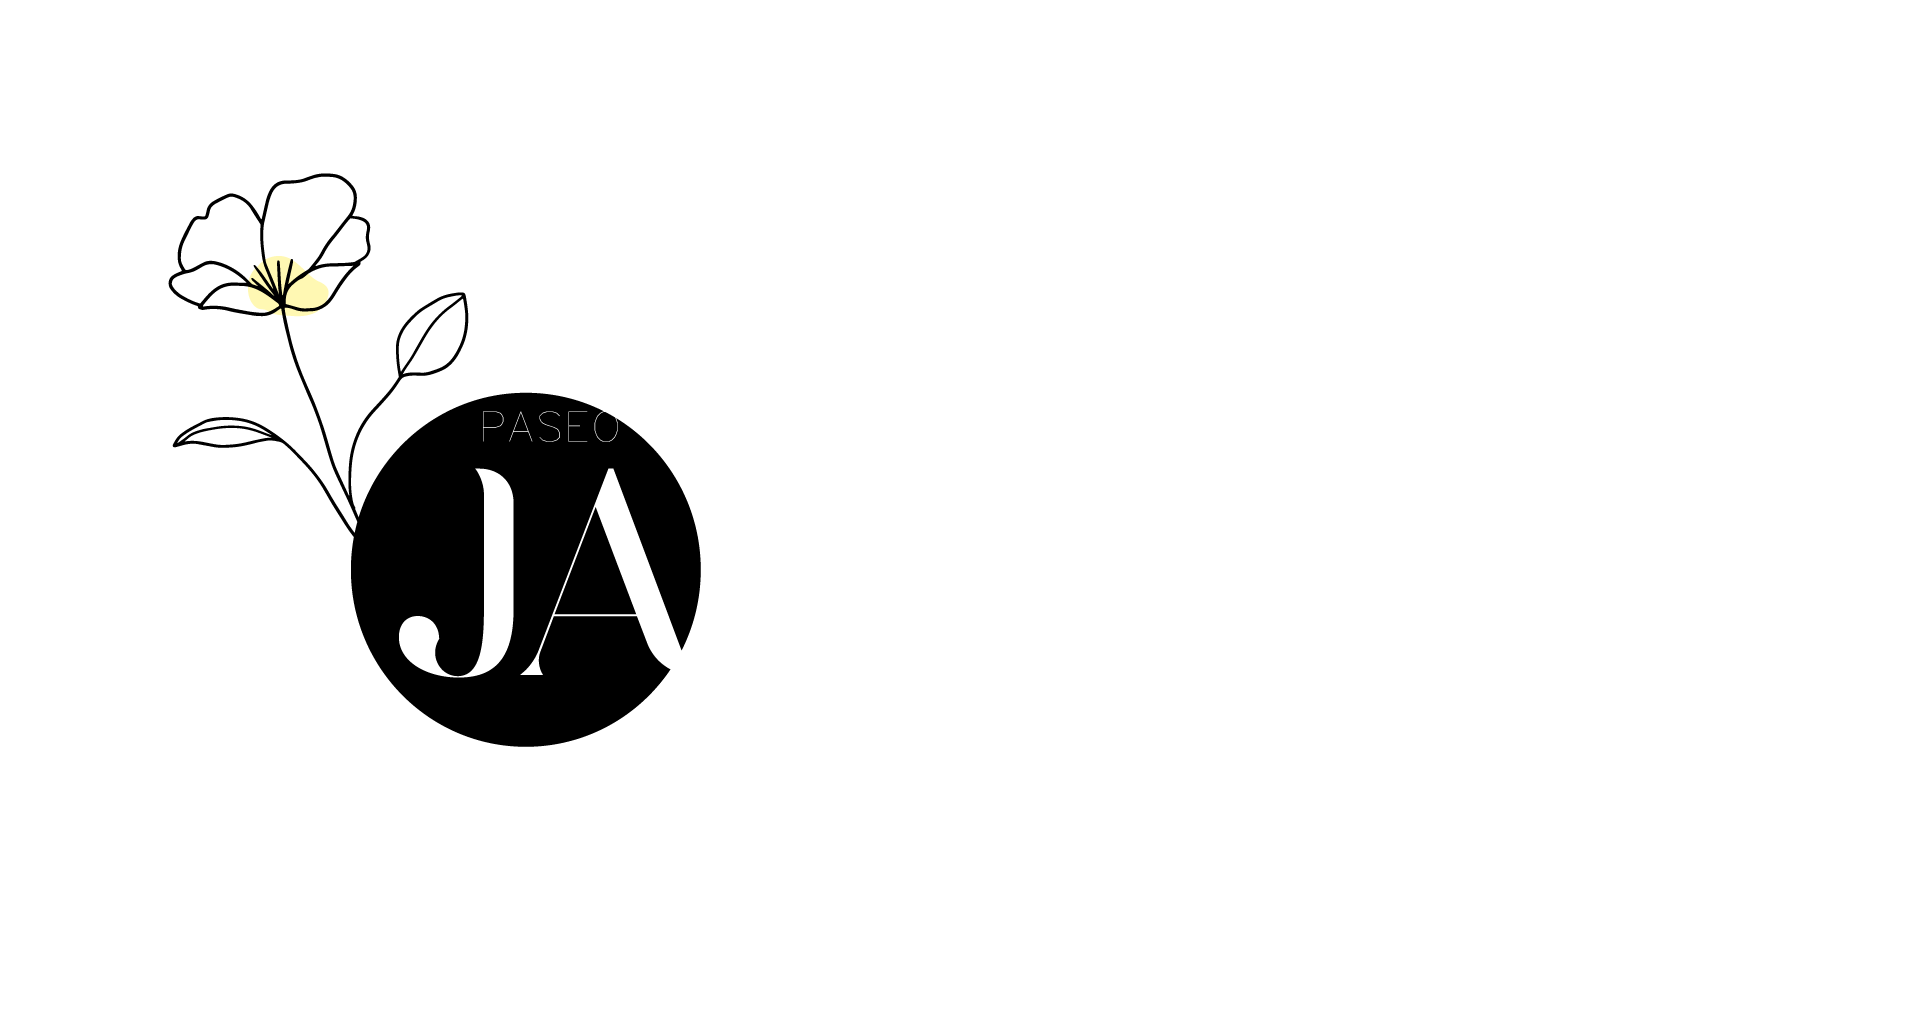 Paseo Jazmines